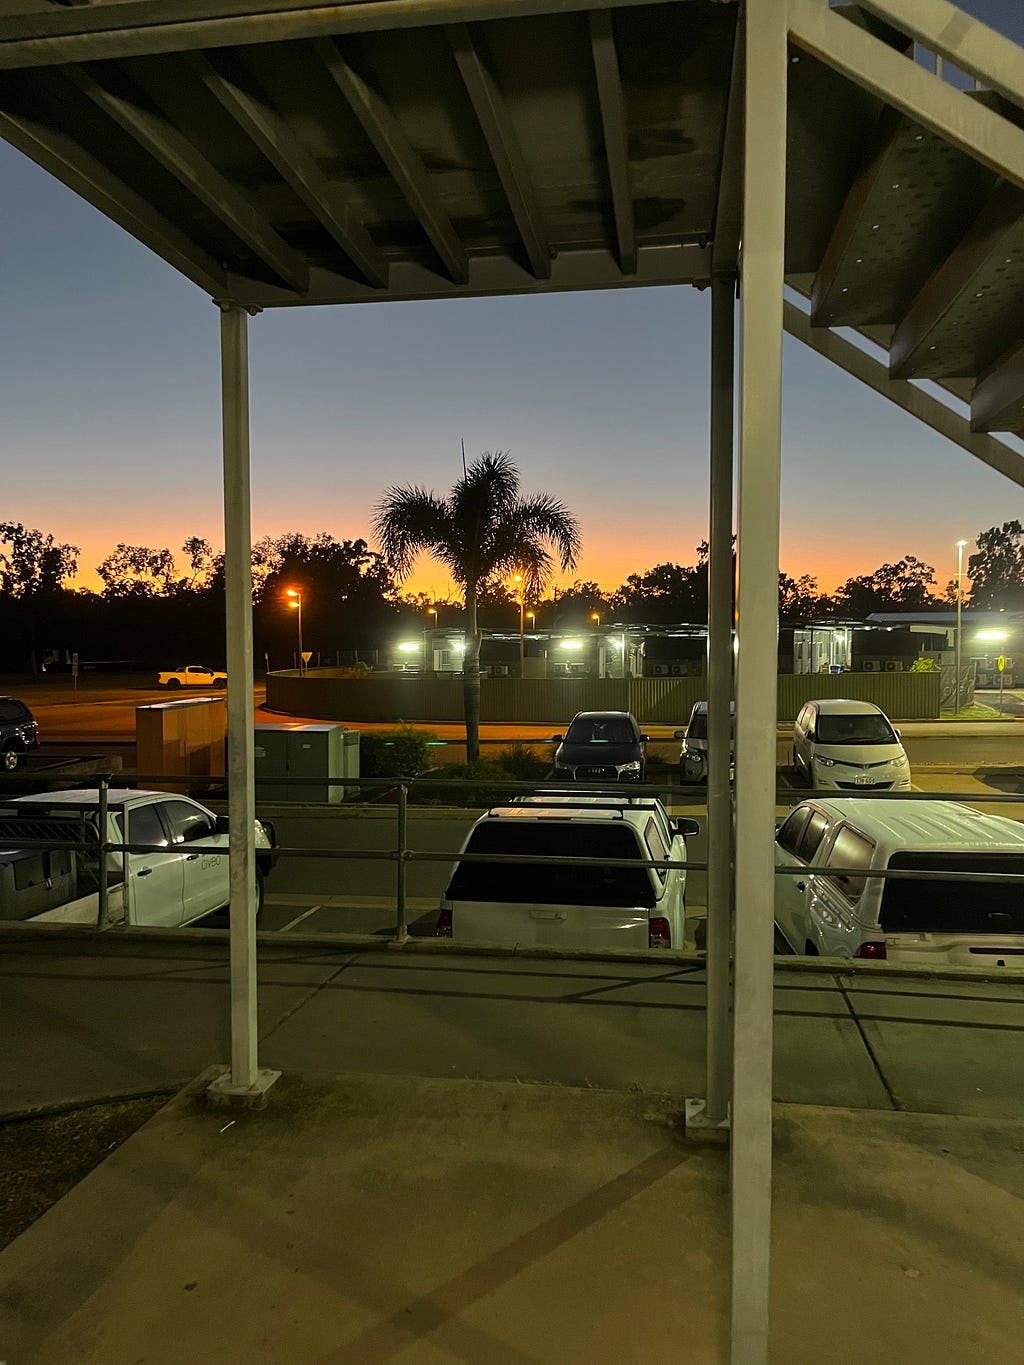 Sunrise at mining camp in Queensland